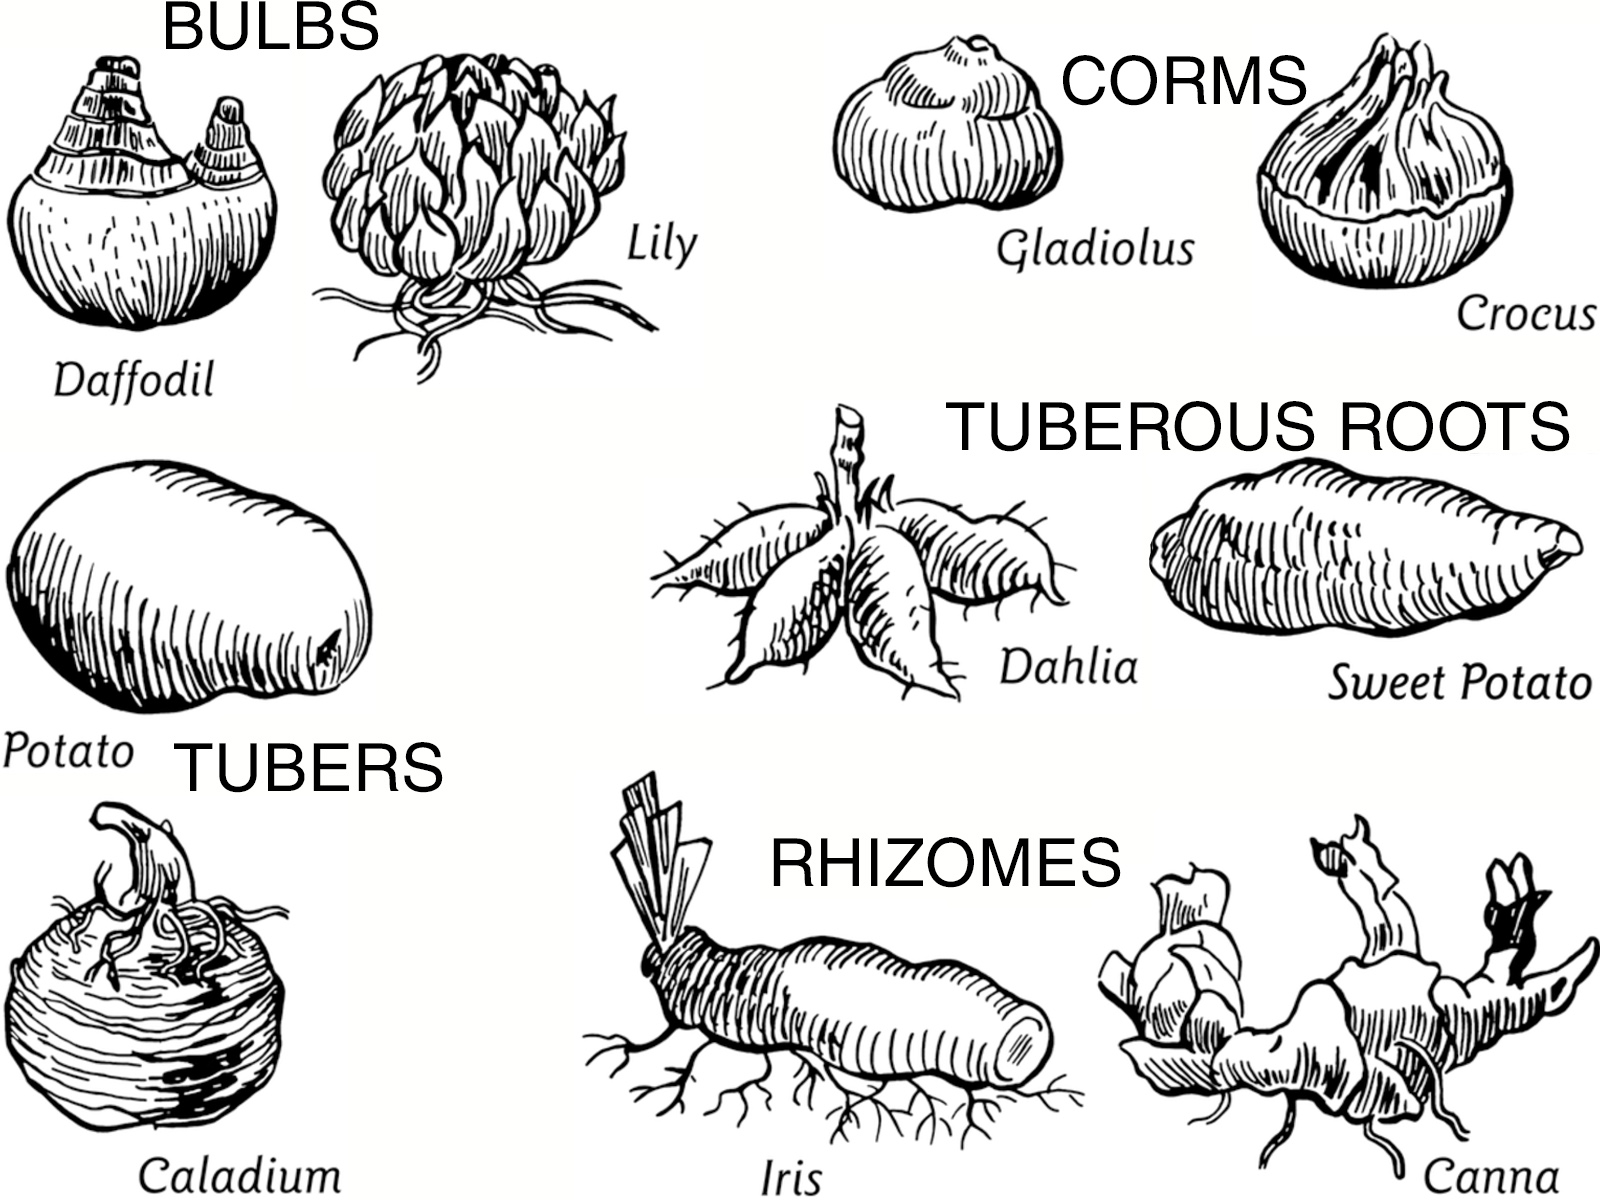 Bulbs Tubers Rhizomes Corms - on Thursd